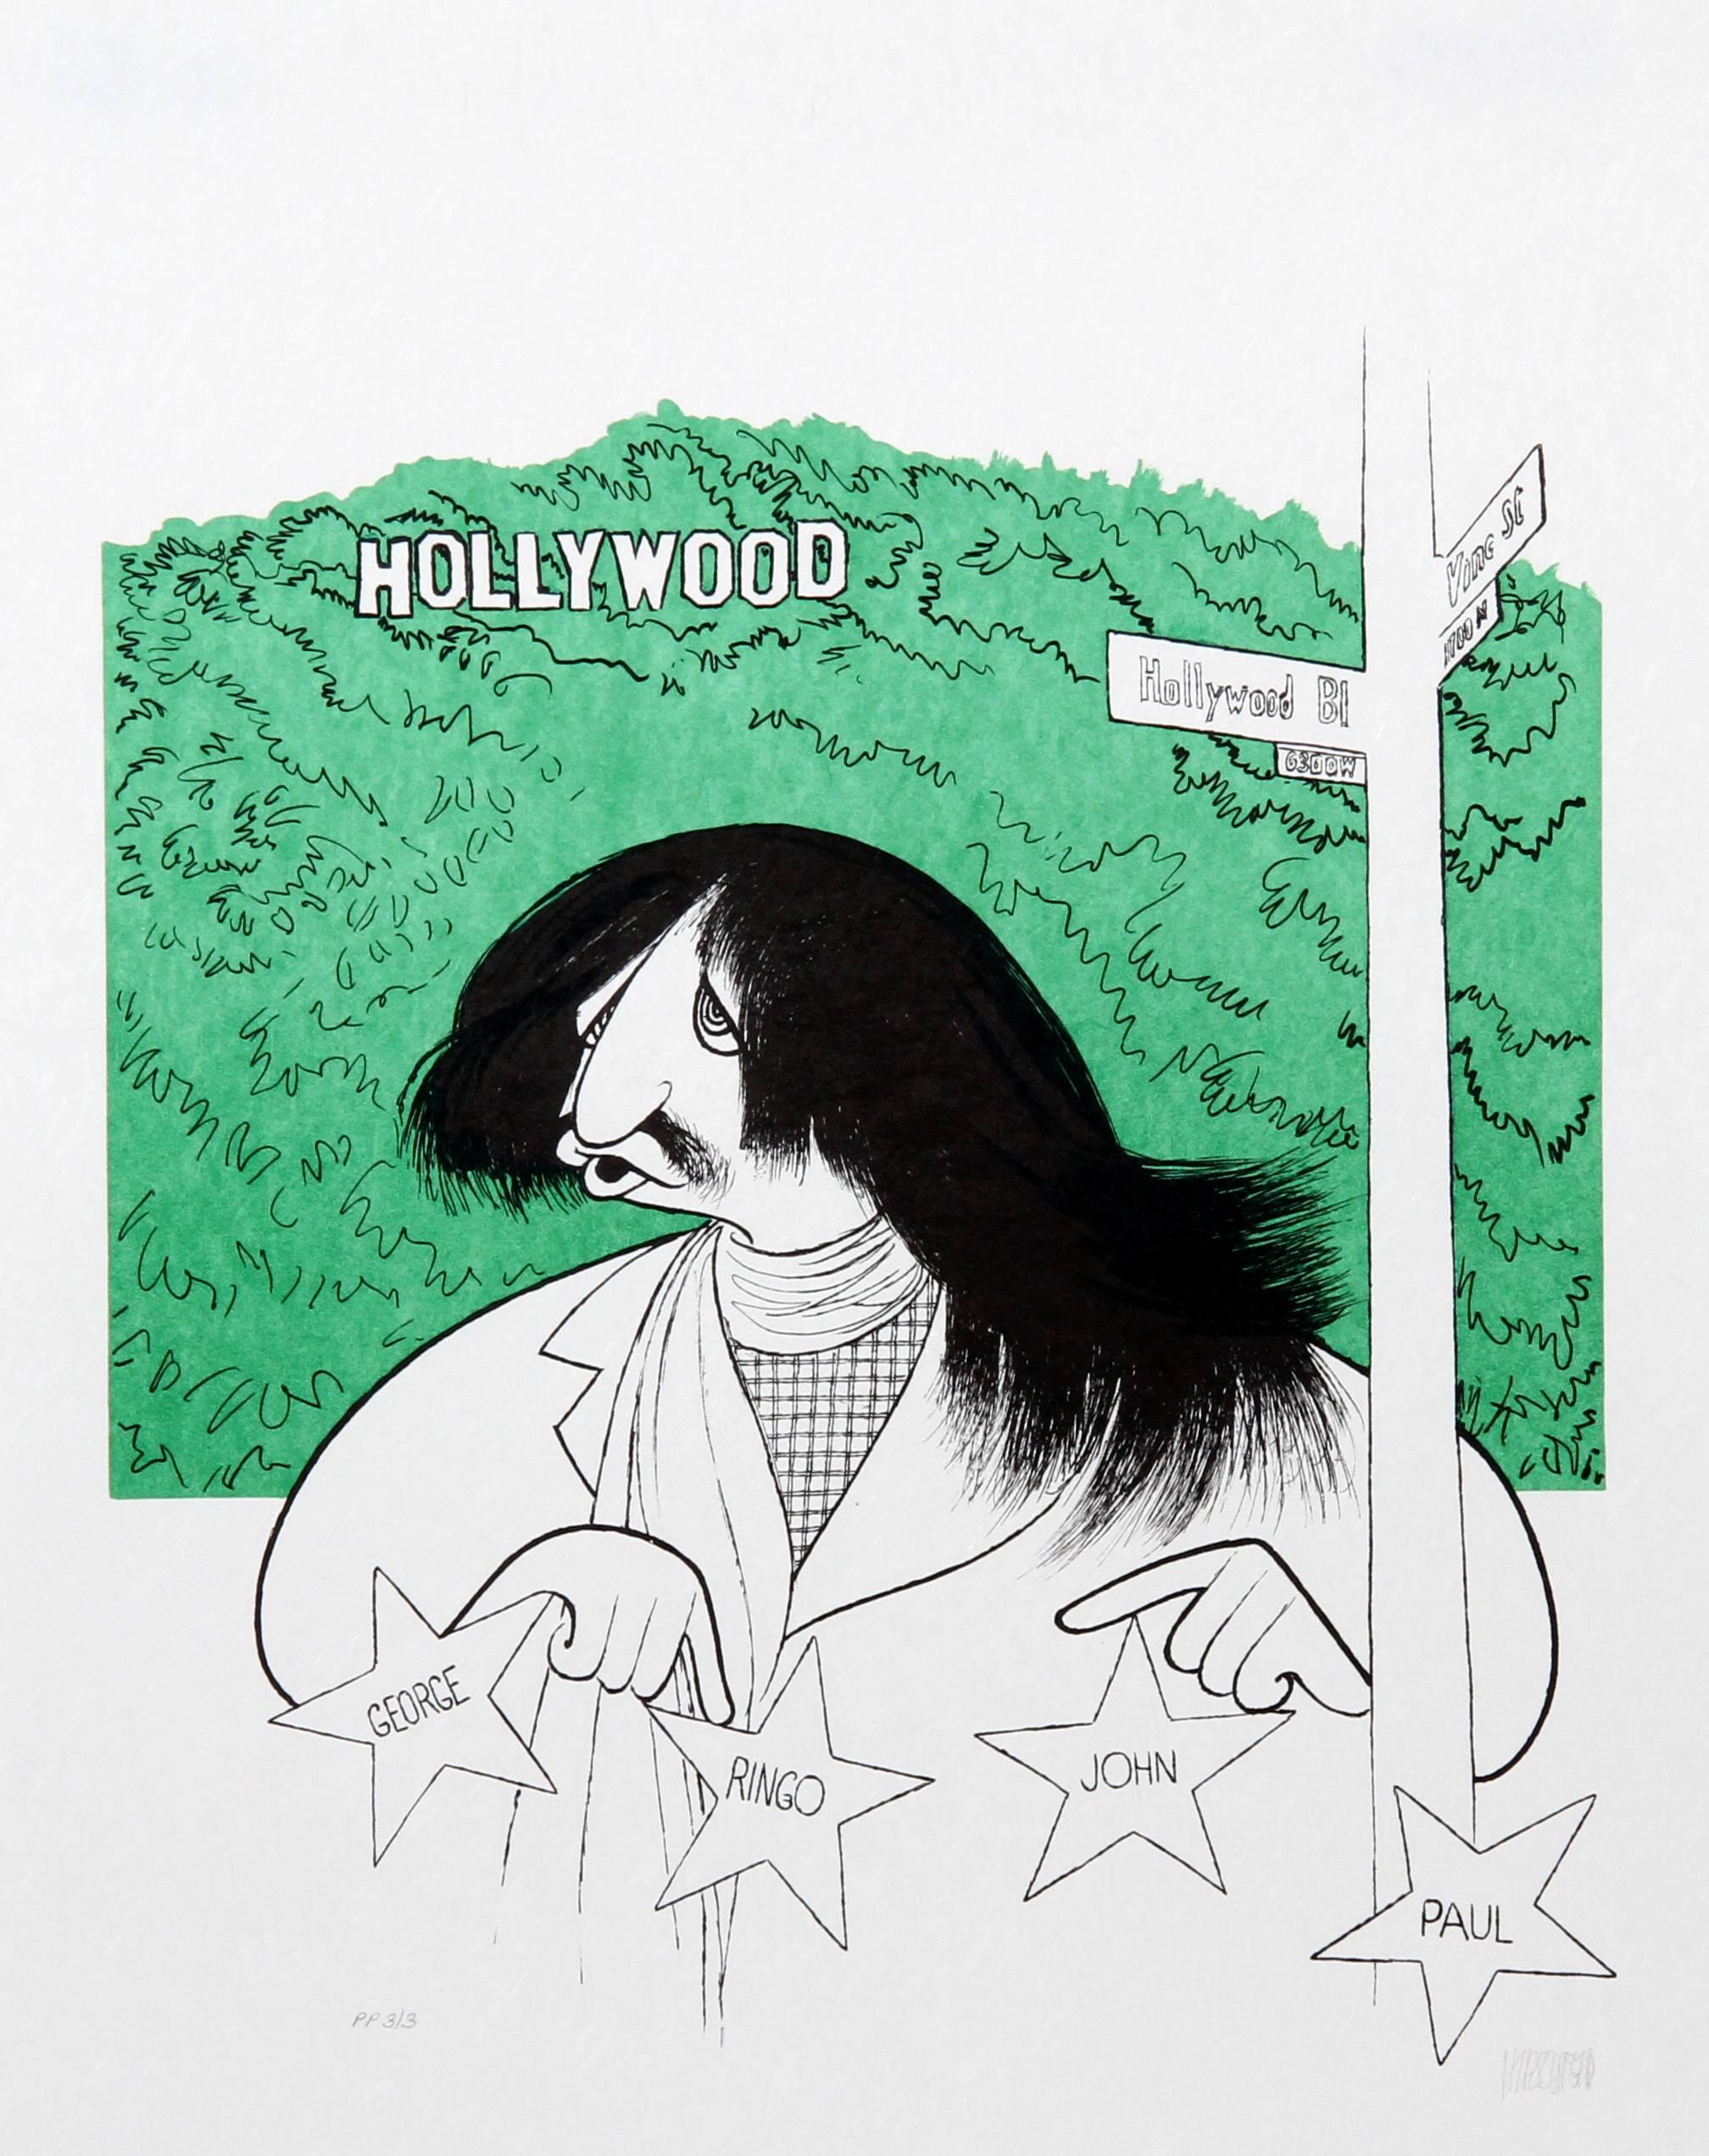 Albert Al Hirschfeld Figurative Print - Ringo Starr Visits Hollywood, Lithograph by Al Hirschfeld